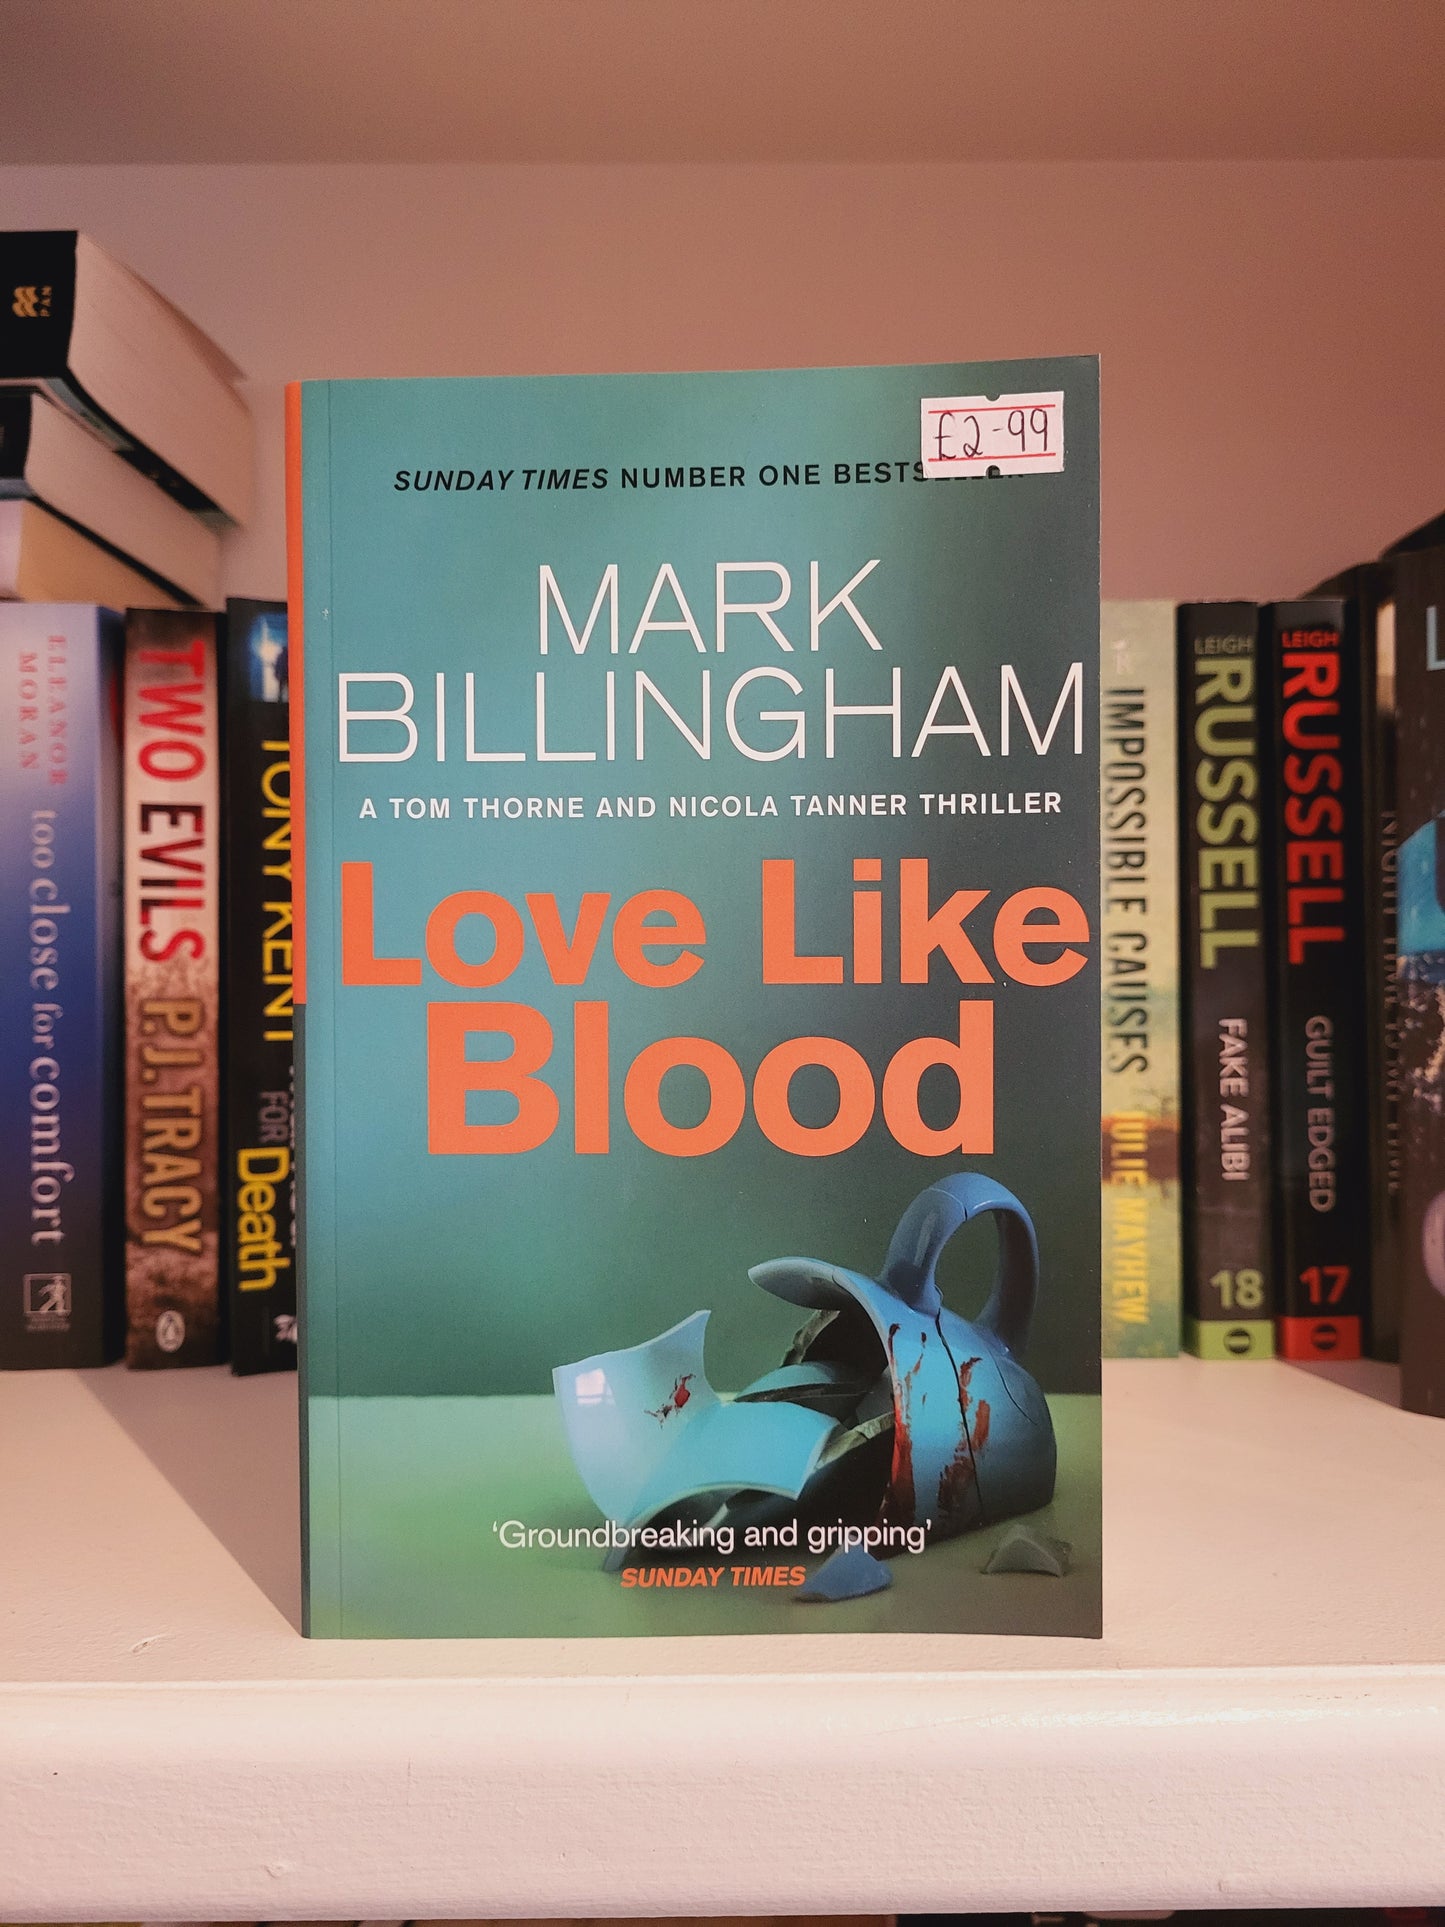 Love Like Blood - Mark Billingham